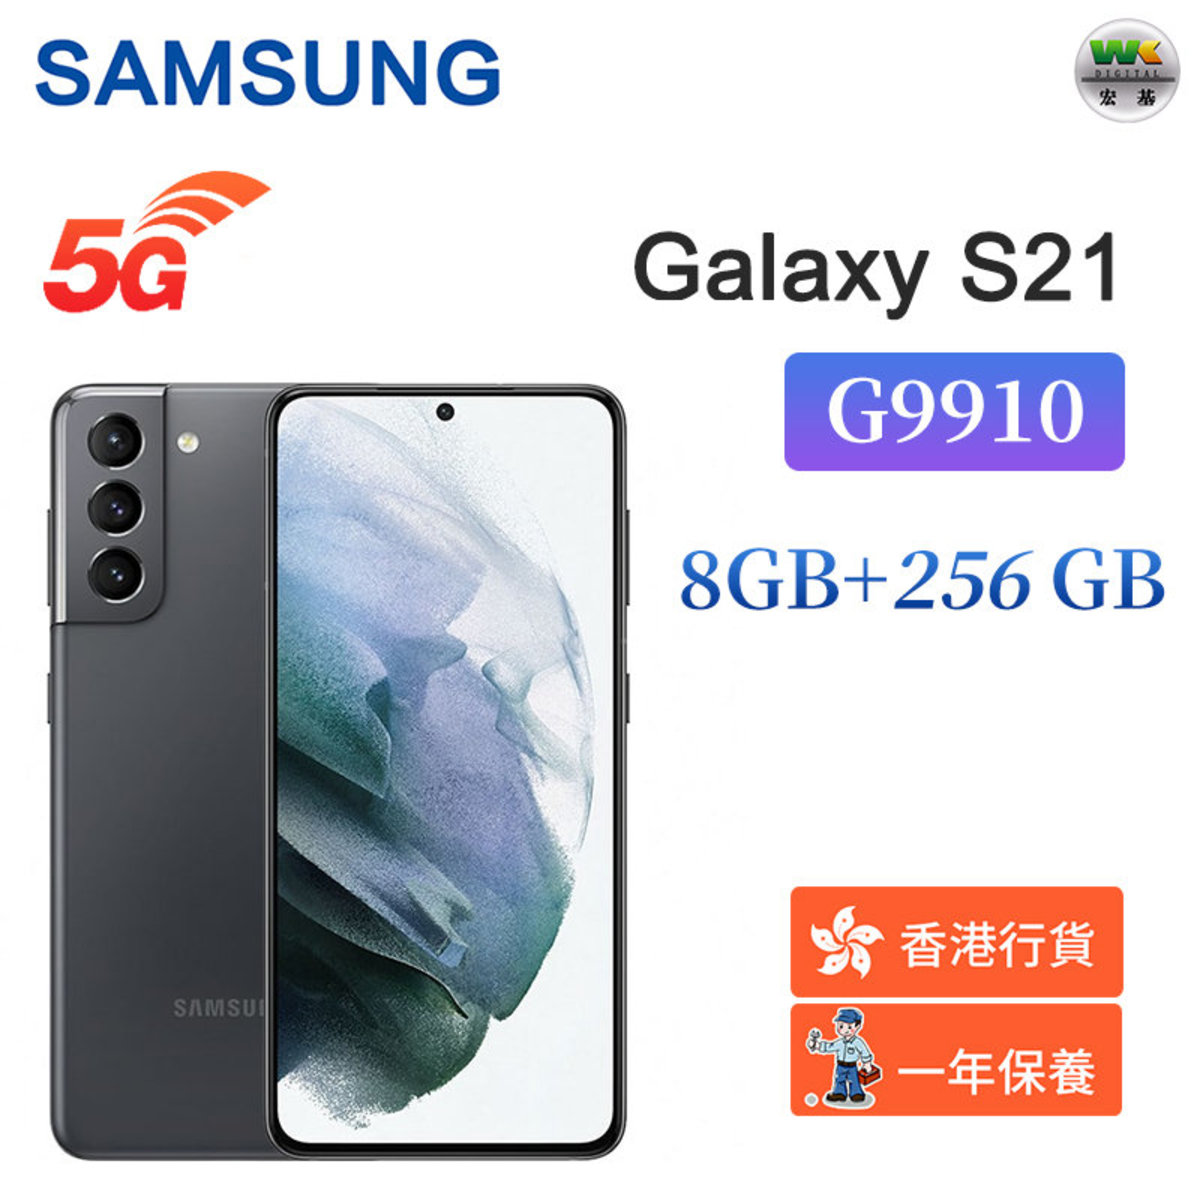 Samsung | GALAXY S21 5G G9910 (8GB + 256GB) - Gray [Hong Kong 